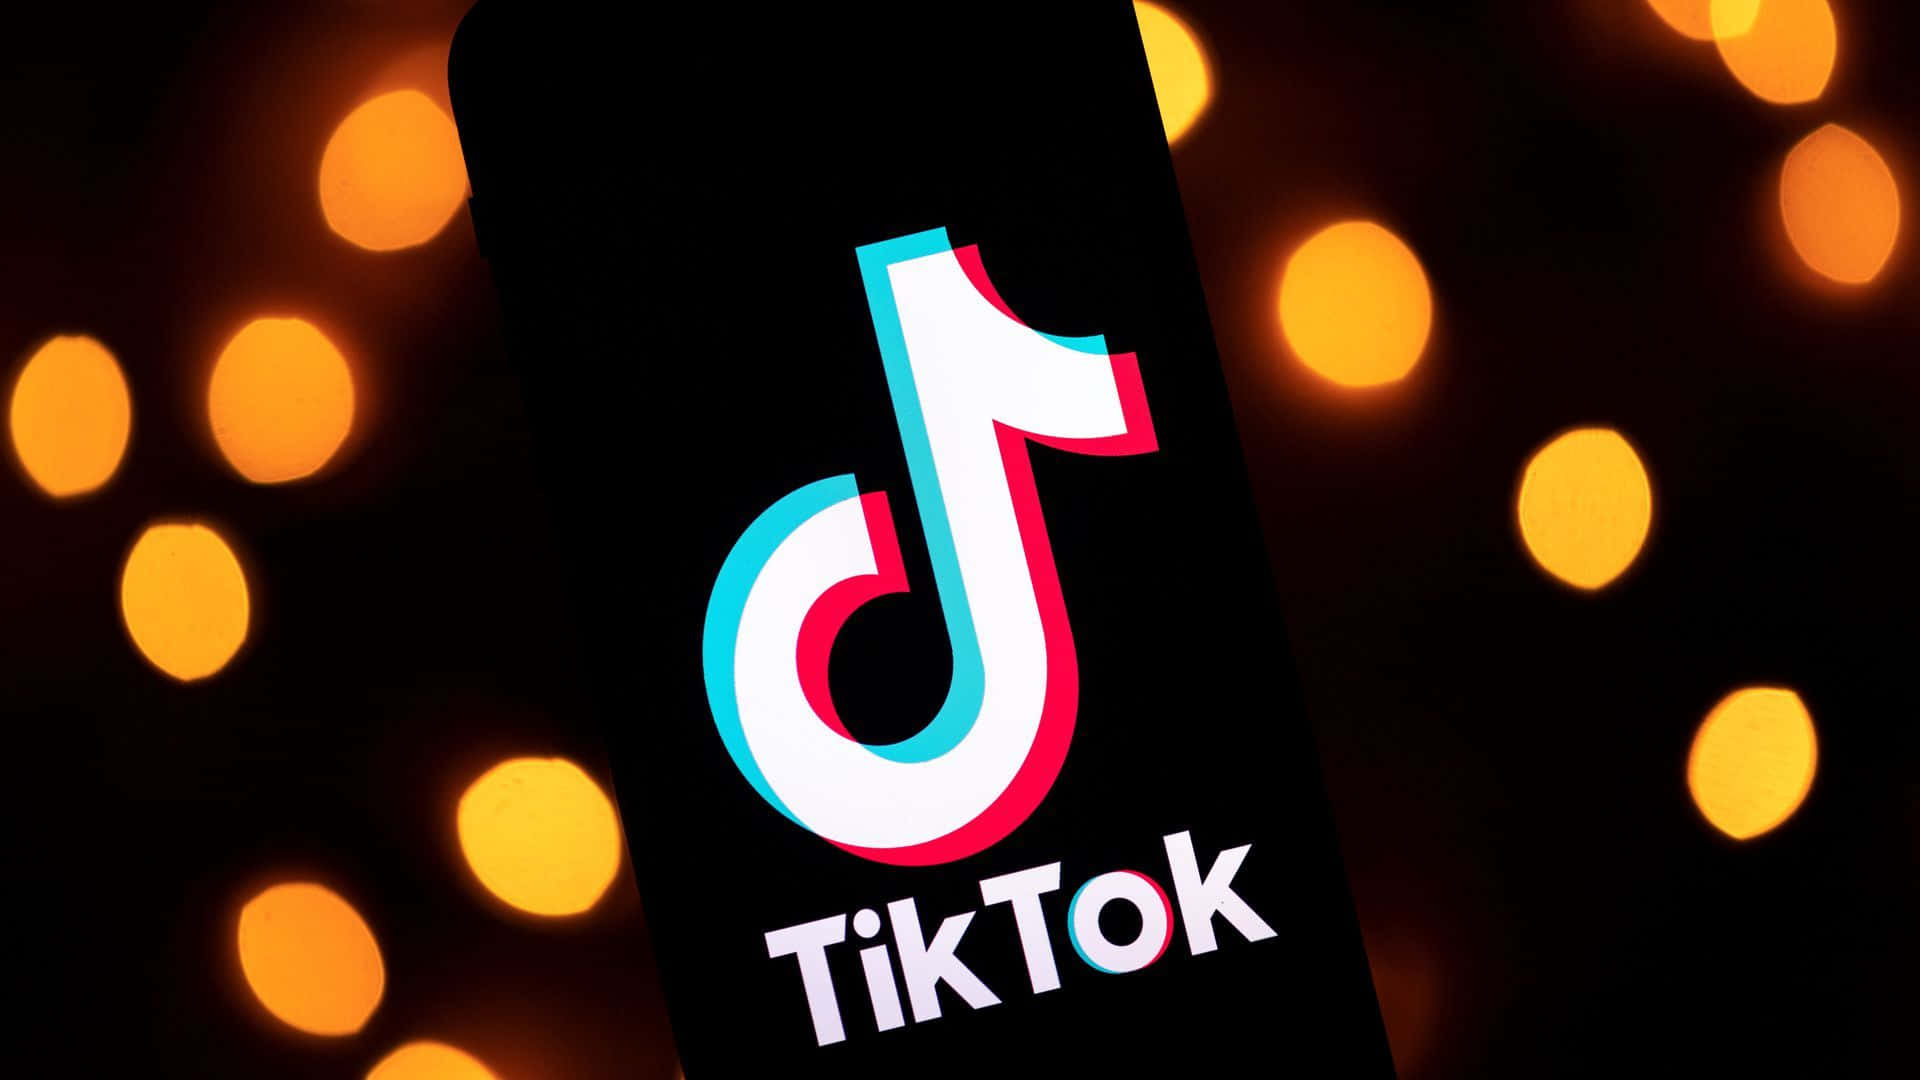 tiktok logo with lights on it